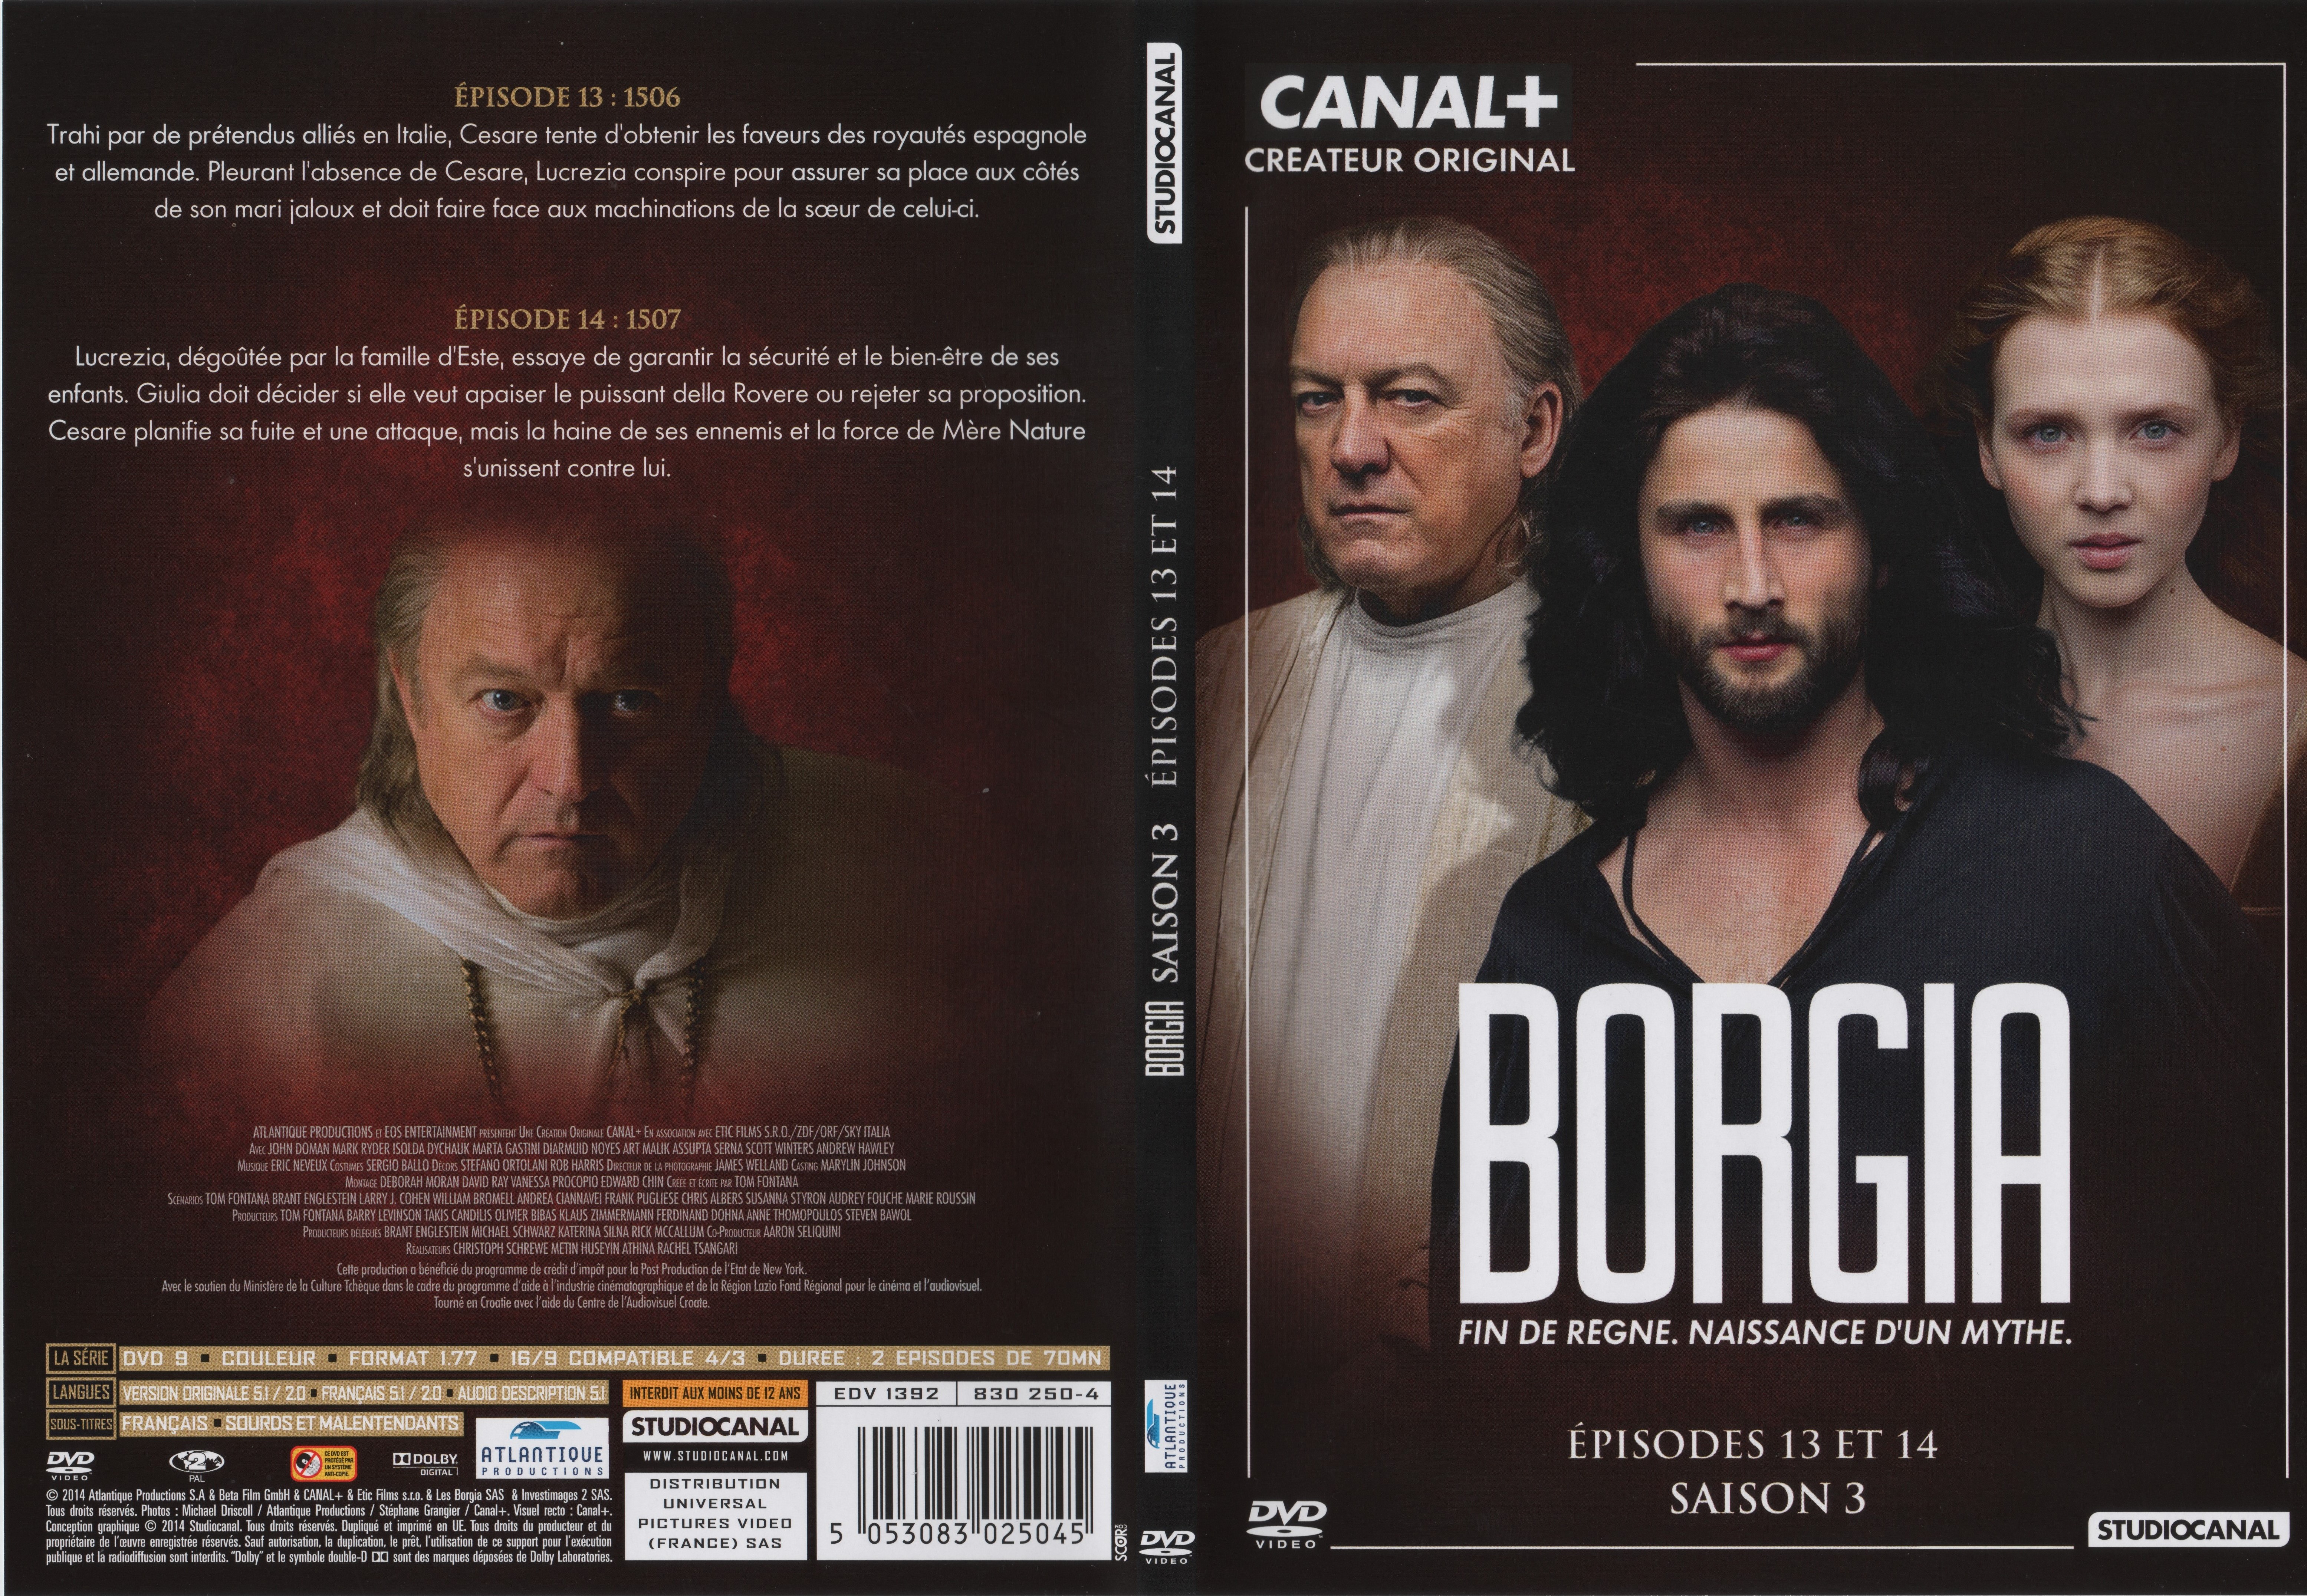 Jaquette DVD Borgia Saison 3 DVD 5